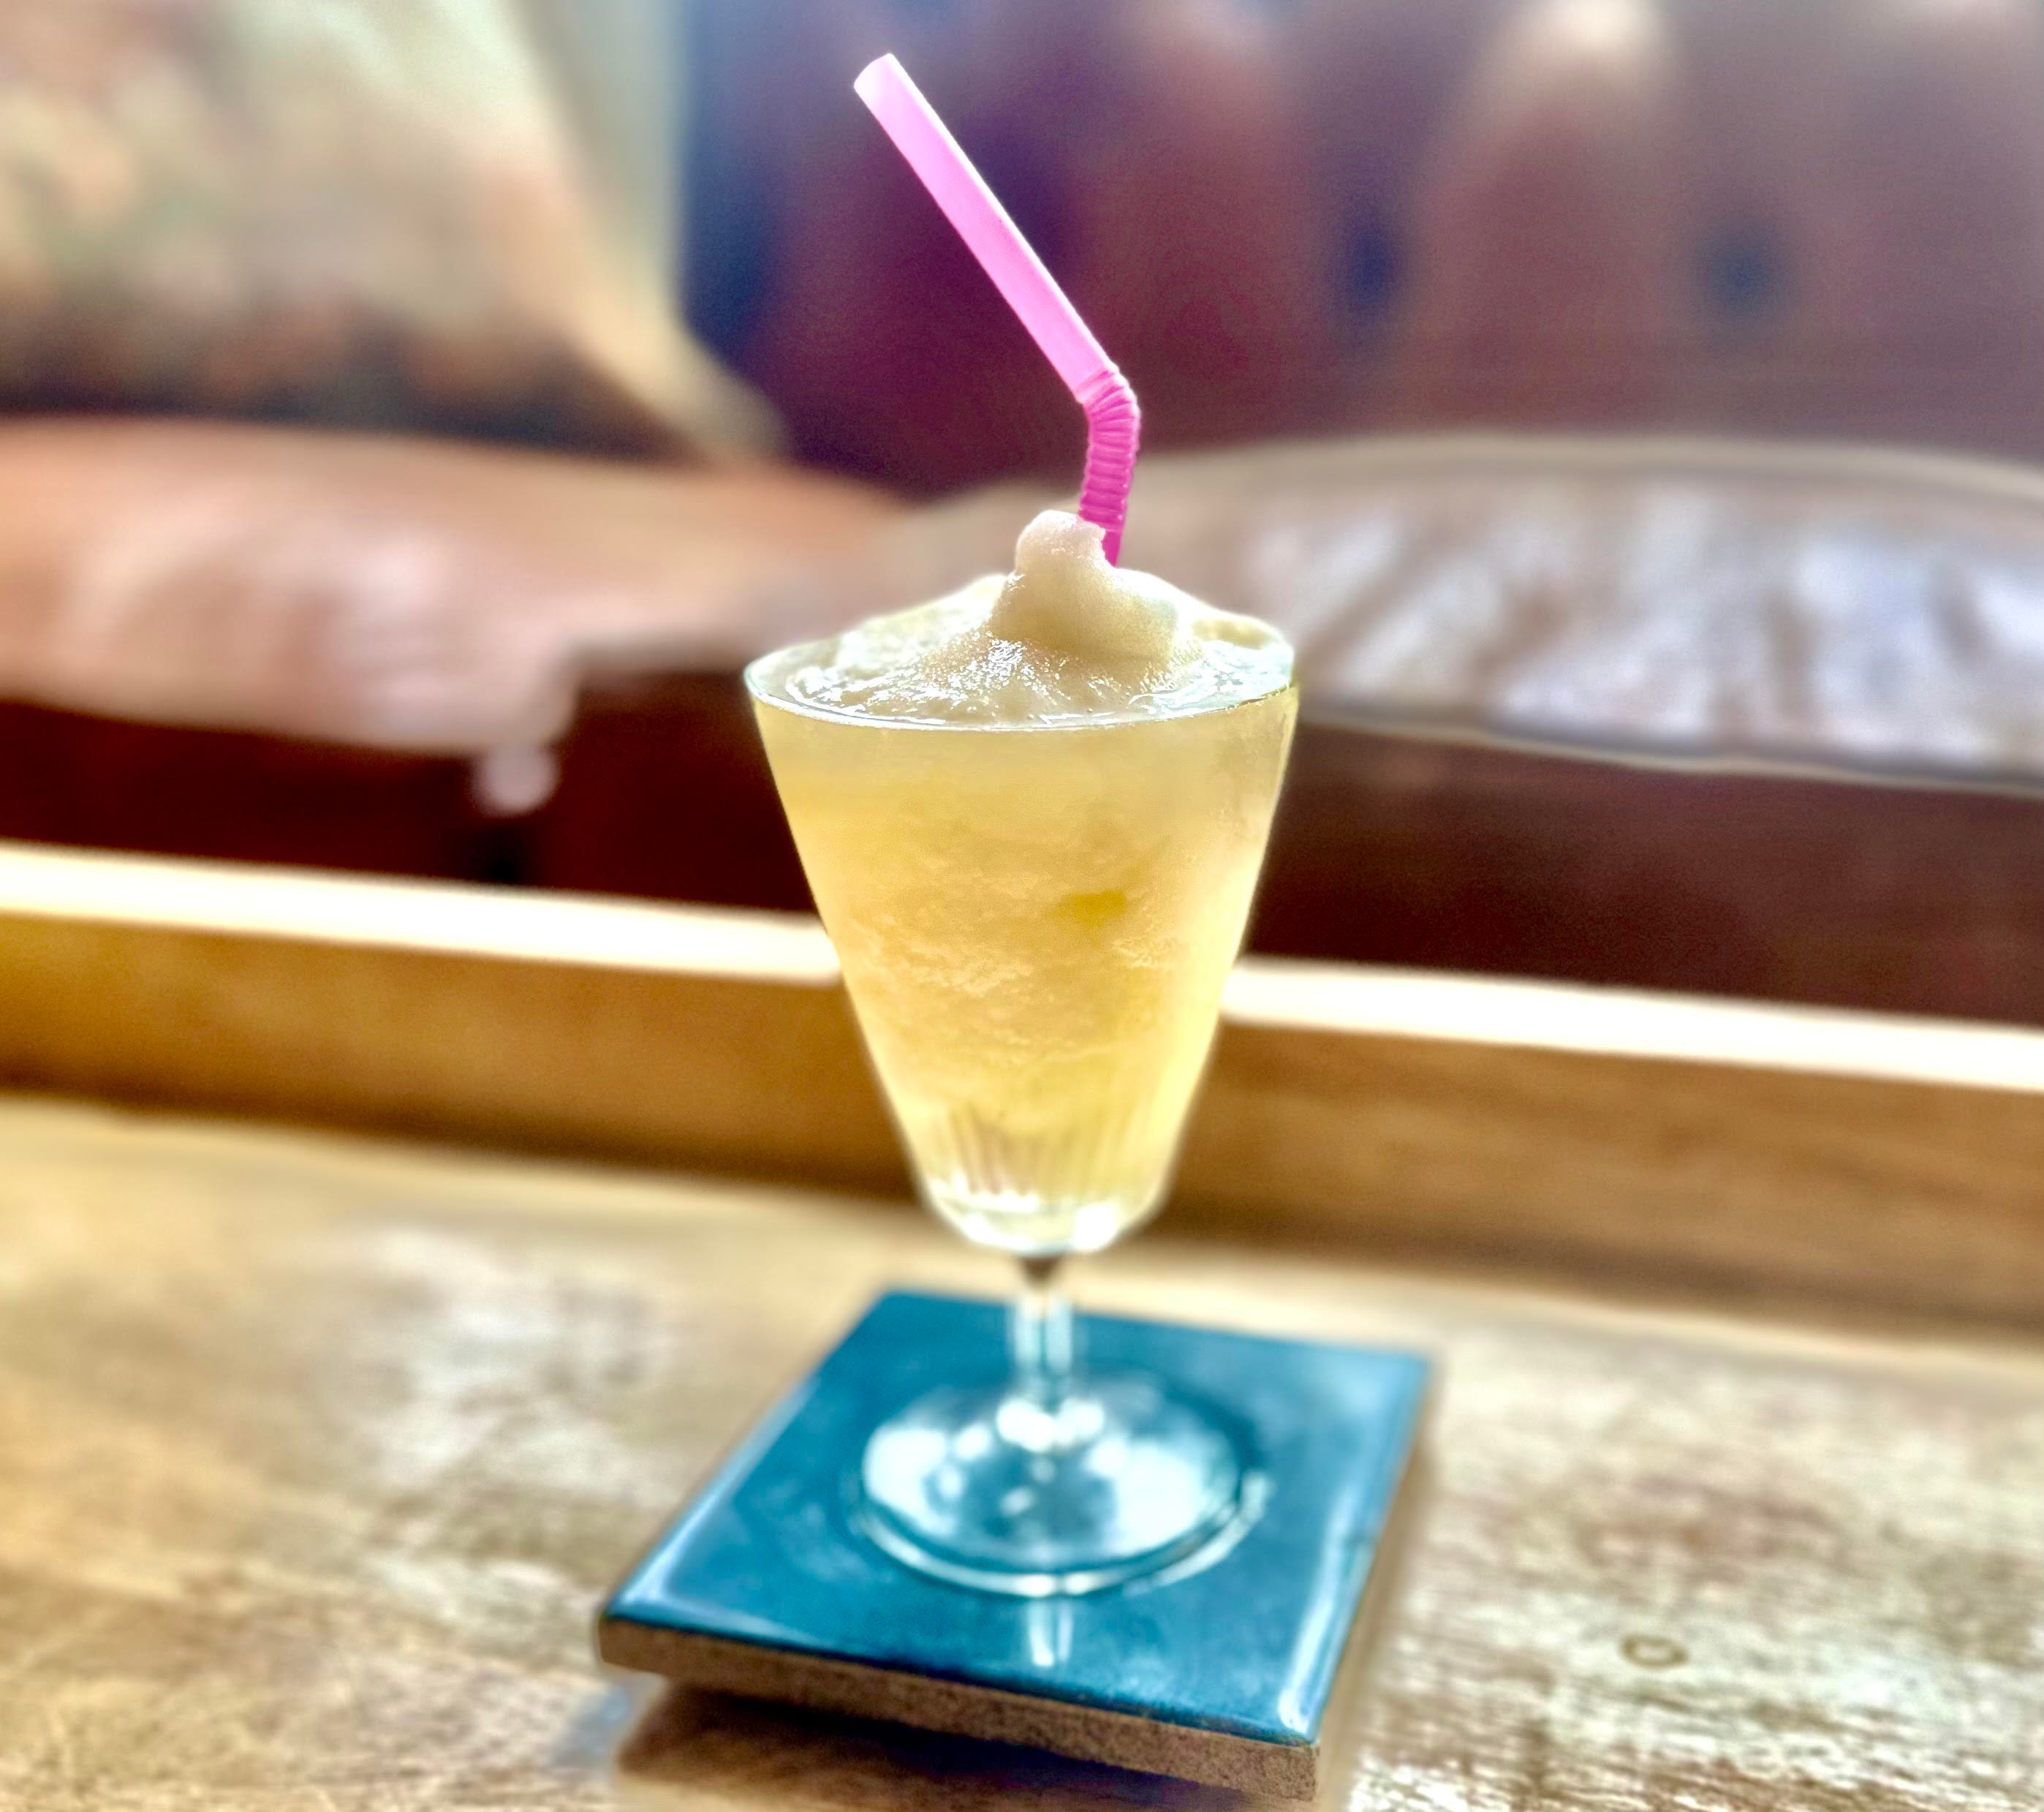 Get Fizzy Frozen Cocktail Recipe: Binded Book 